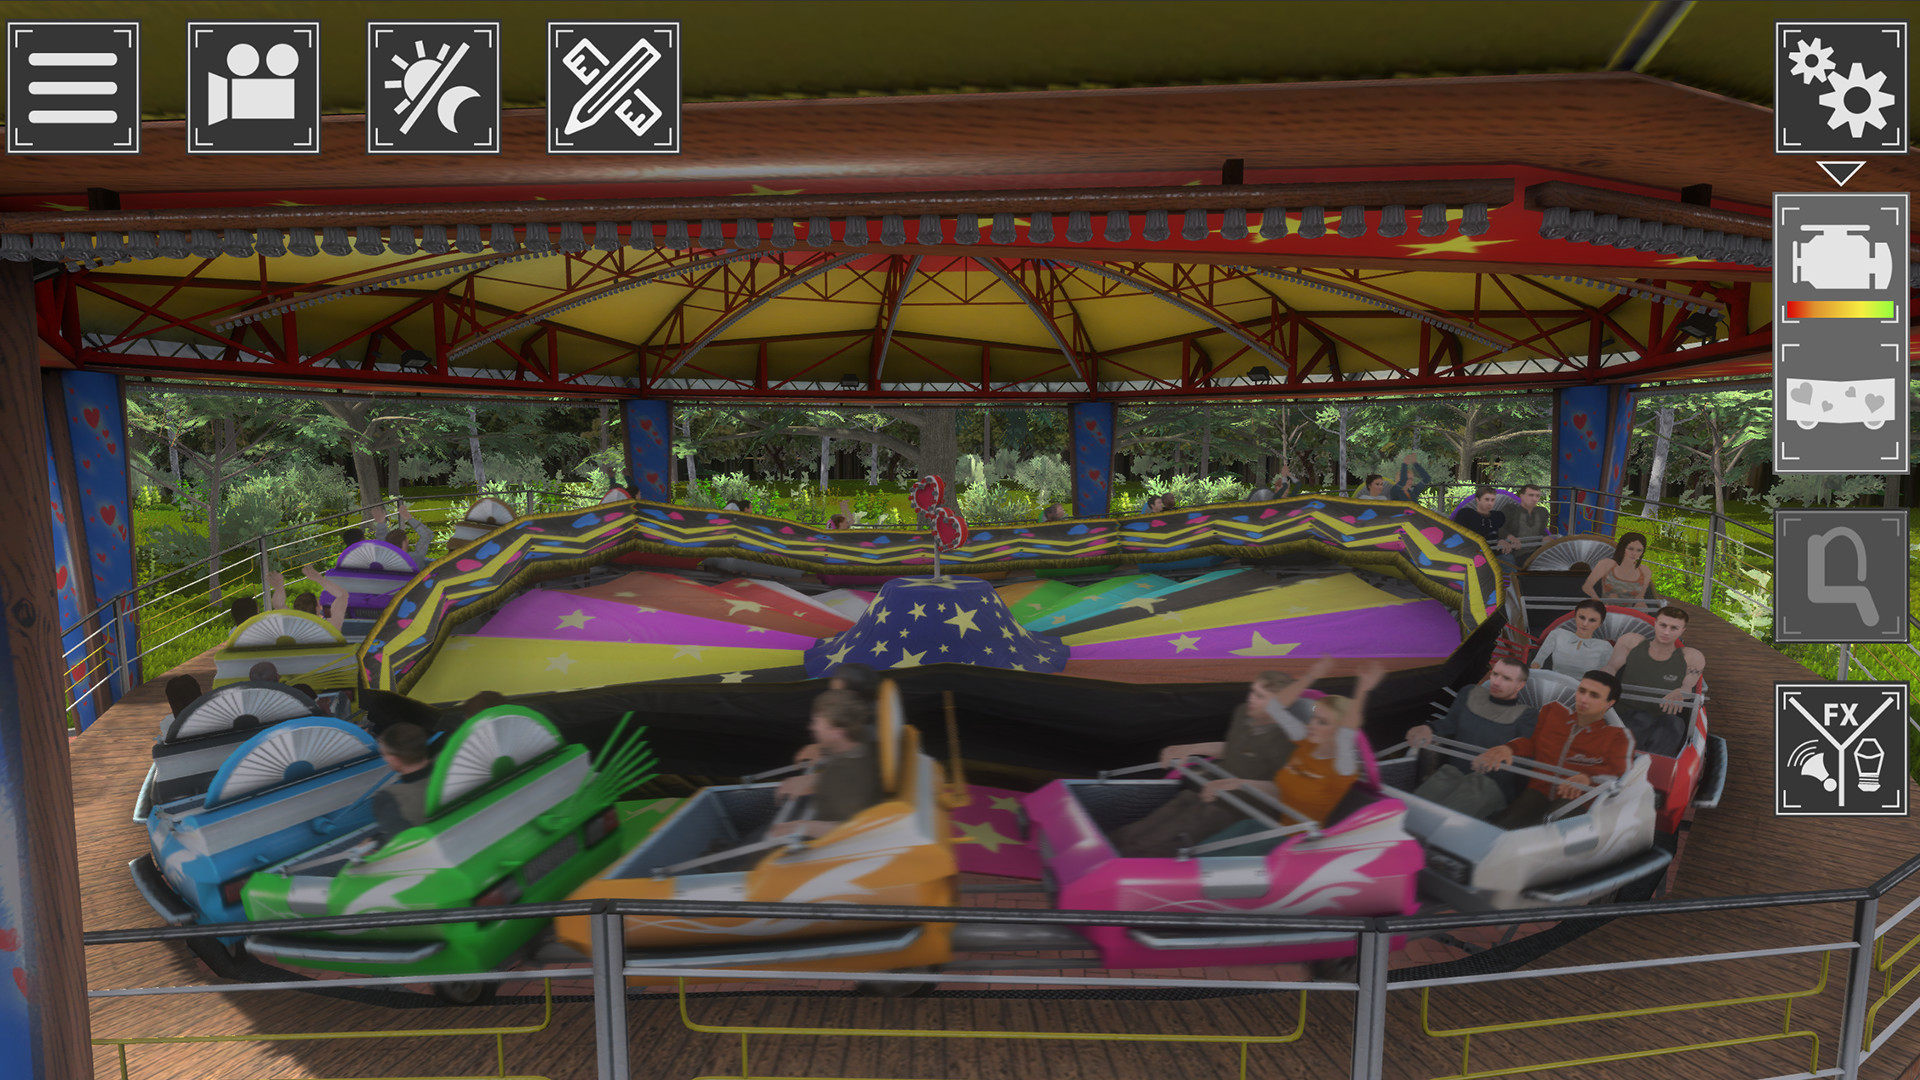 Theme Park Simulator: Rollercoaster Paradise screenshot